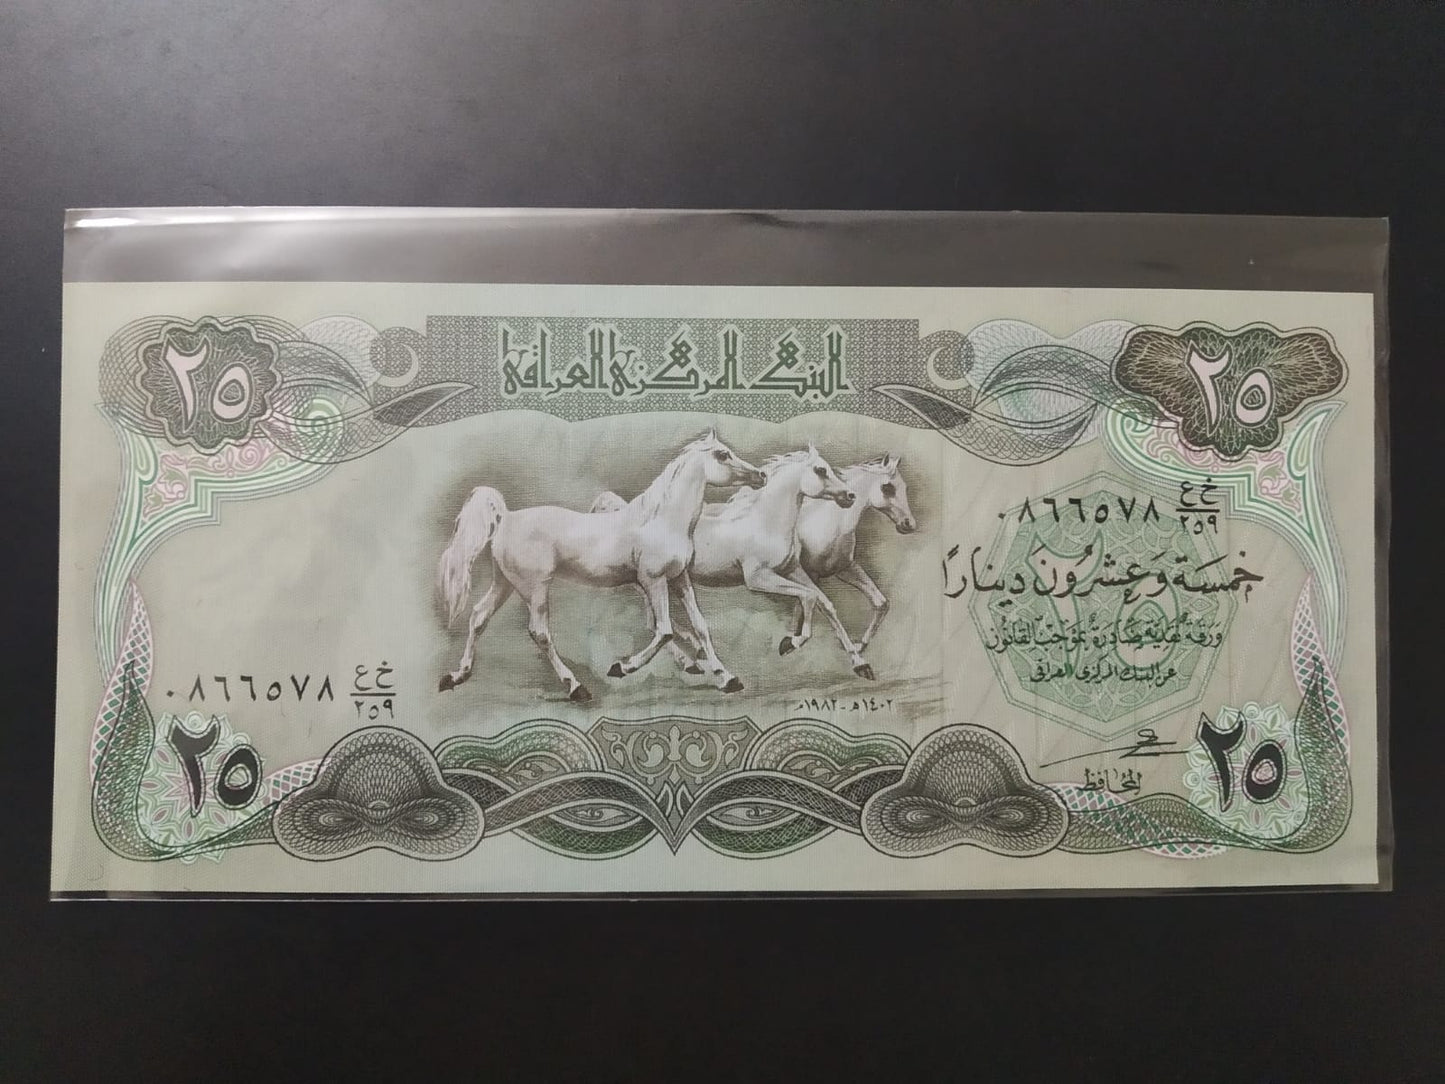 25 Dinars - Iraq UNC (Old issue Big Note )